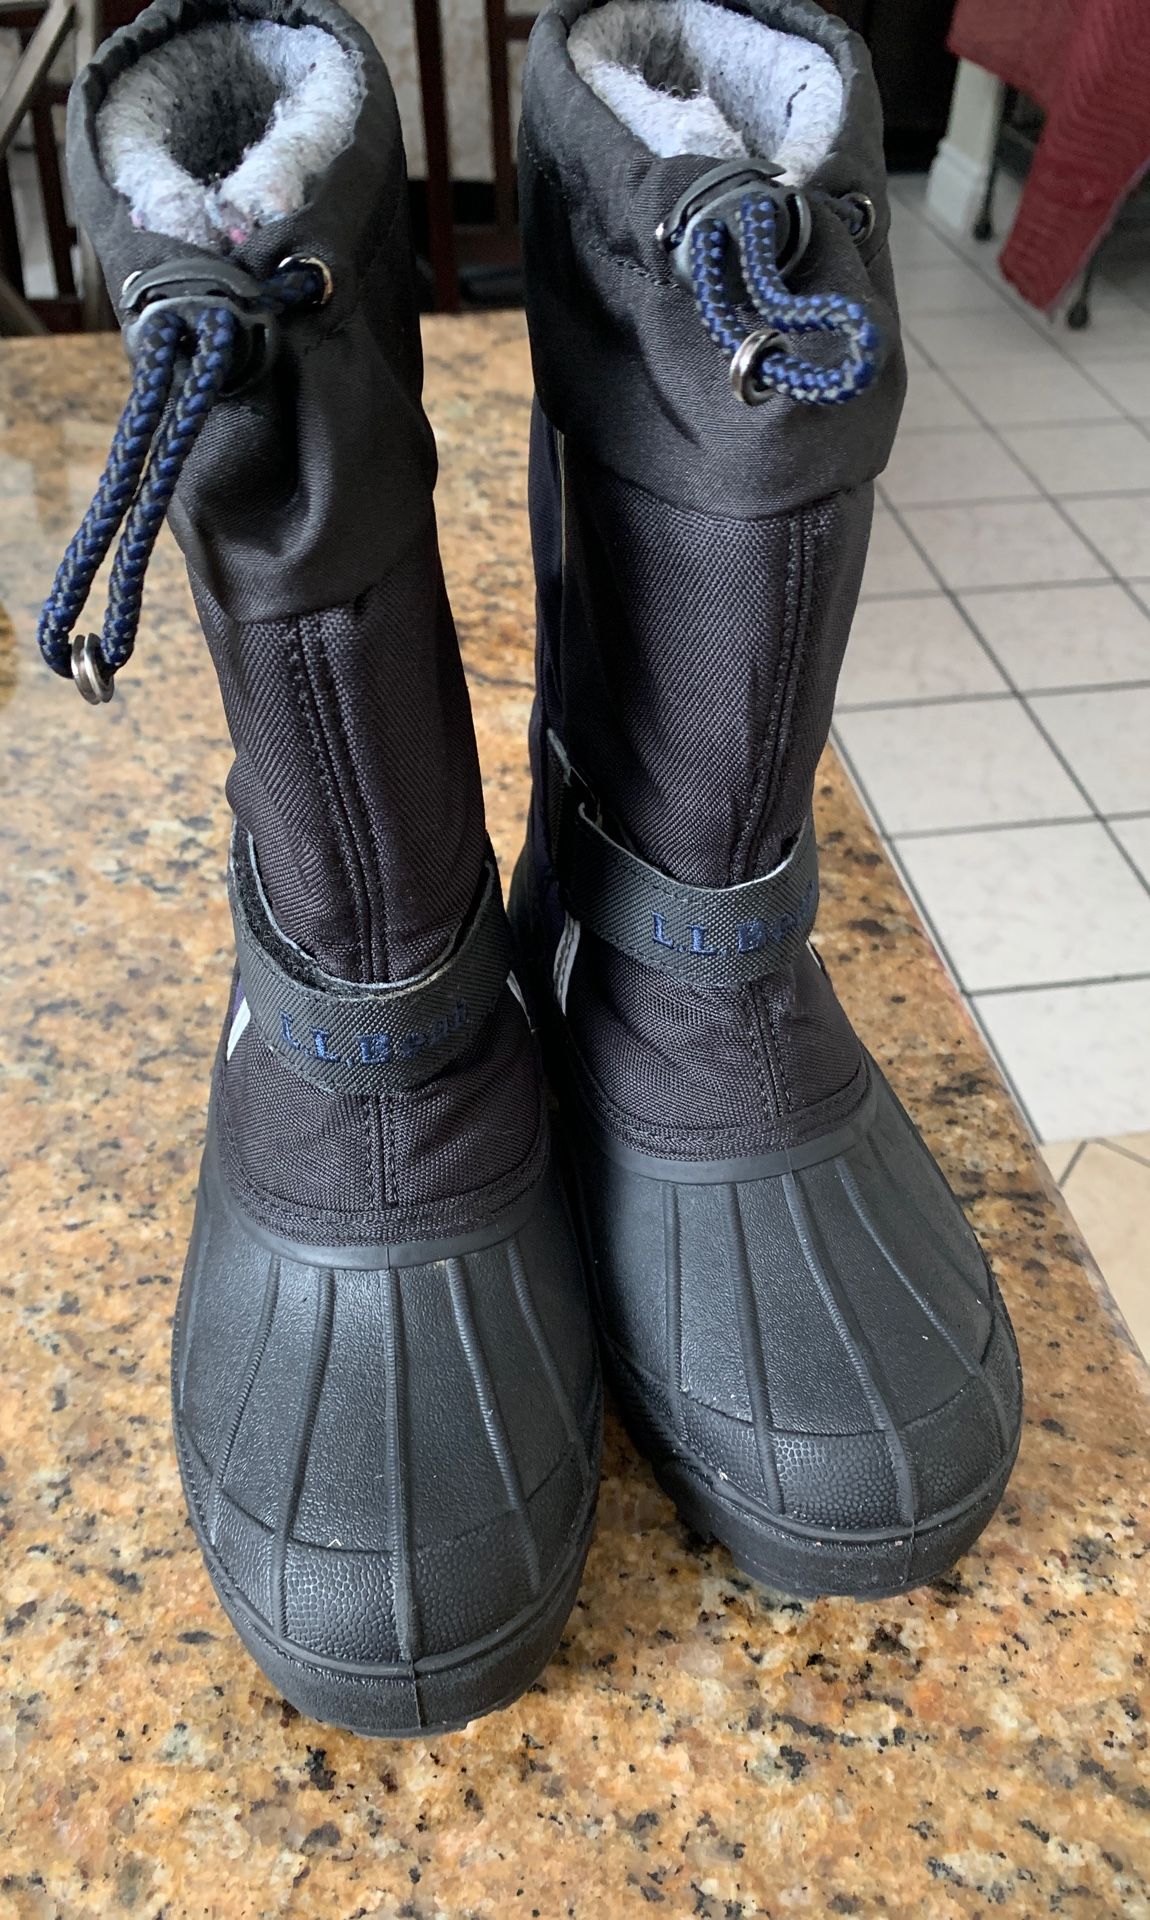 Snow or rain boots kids size 13c